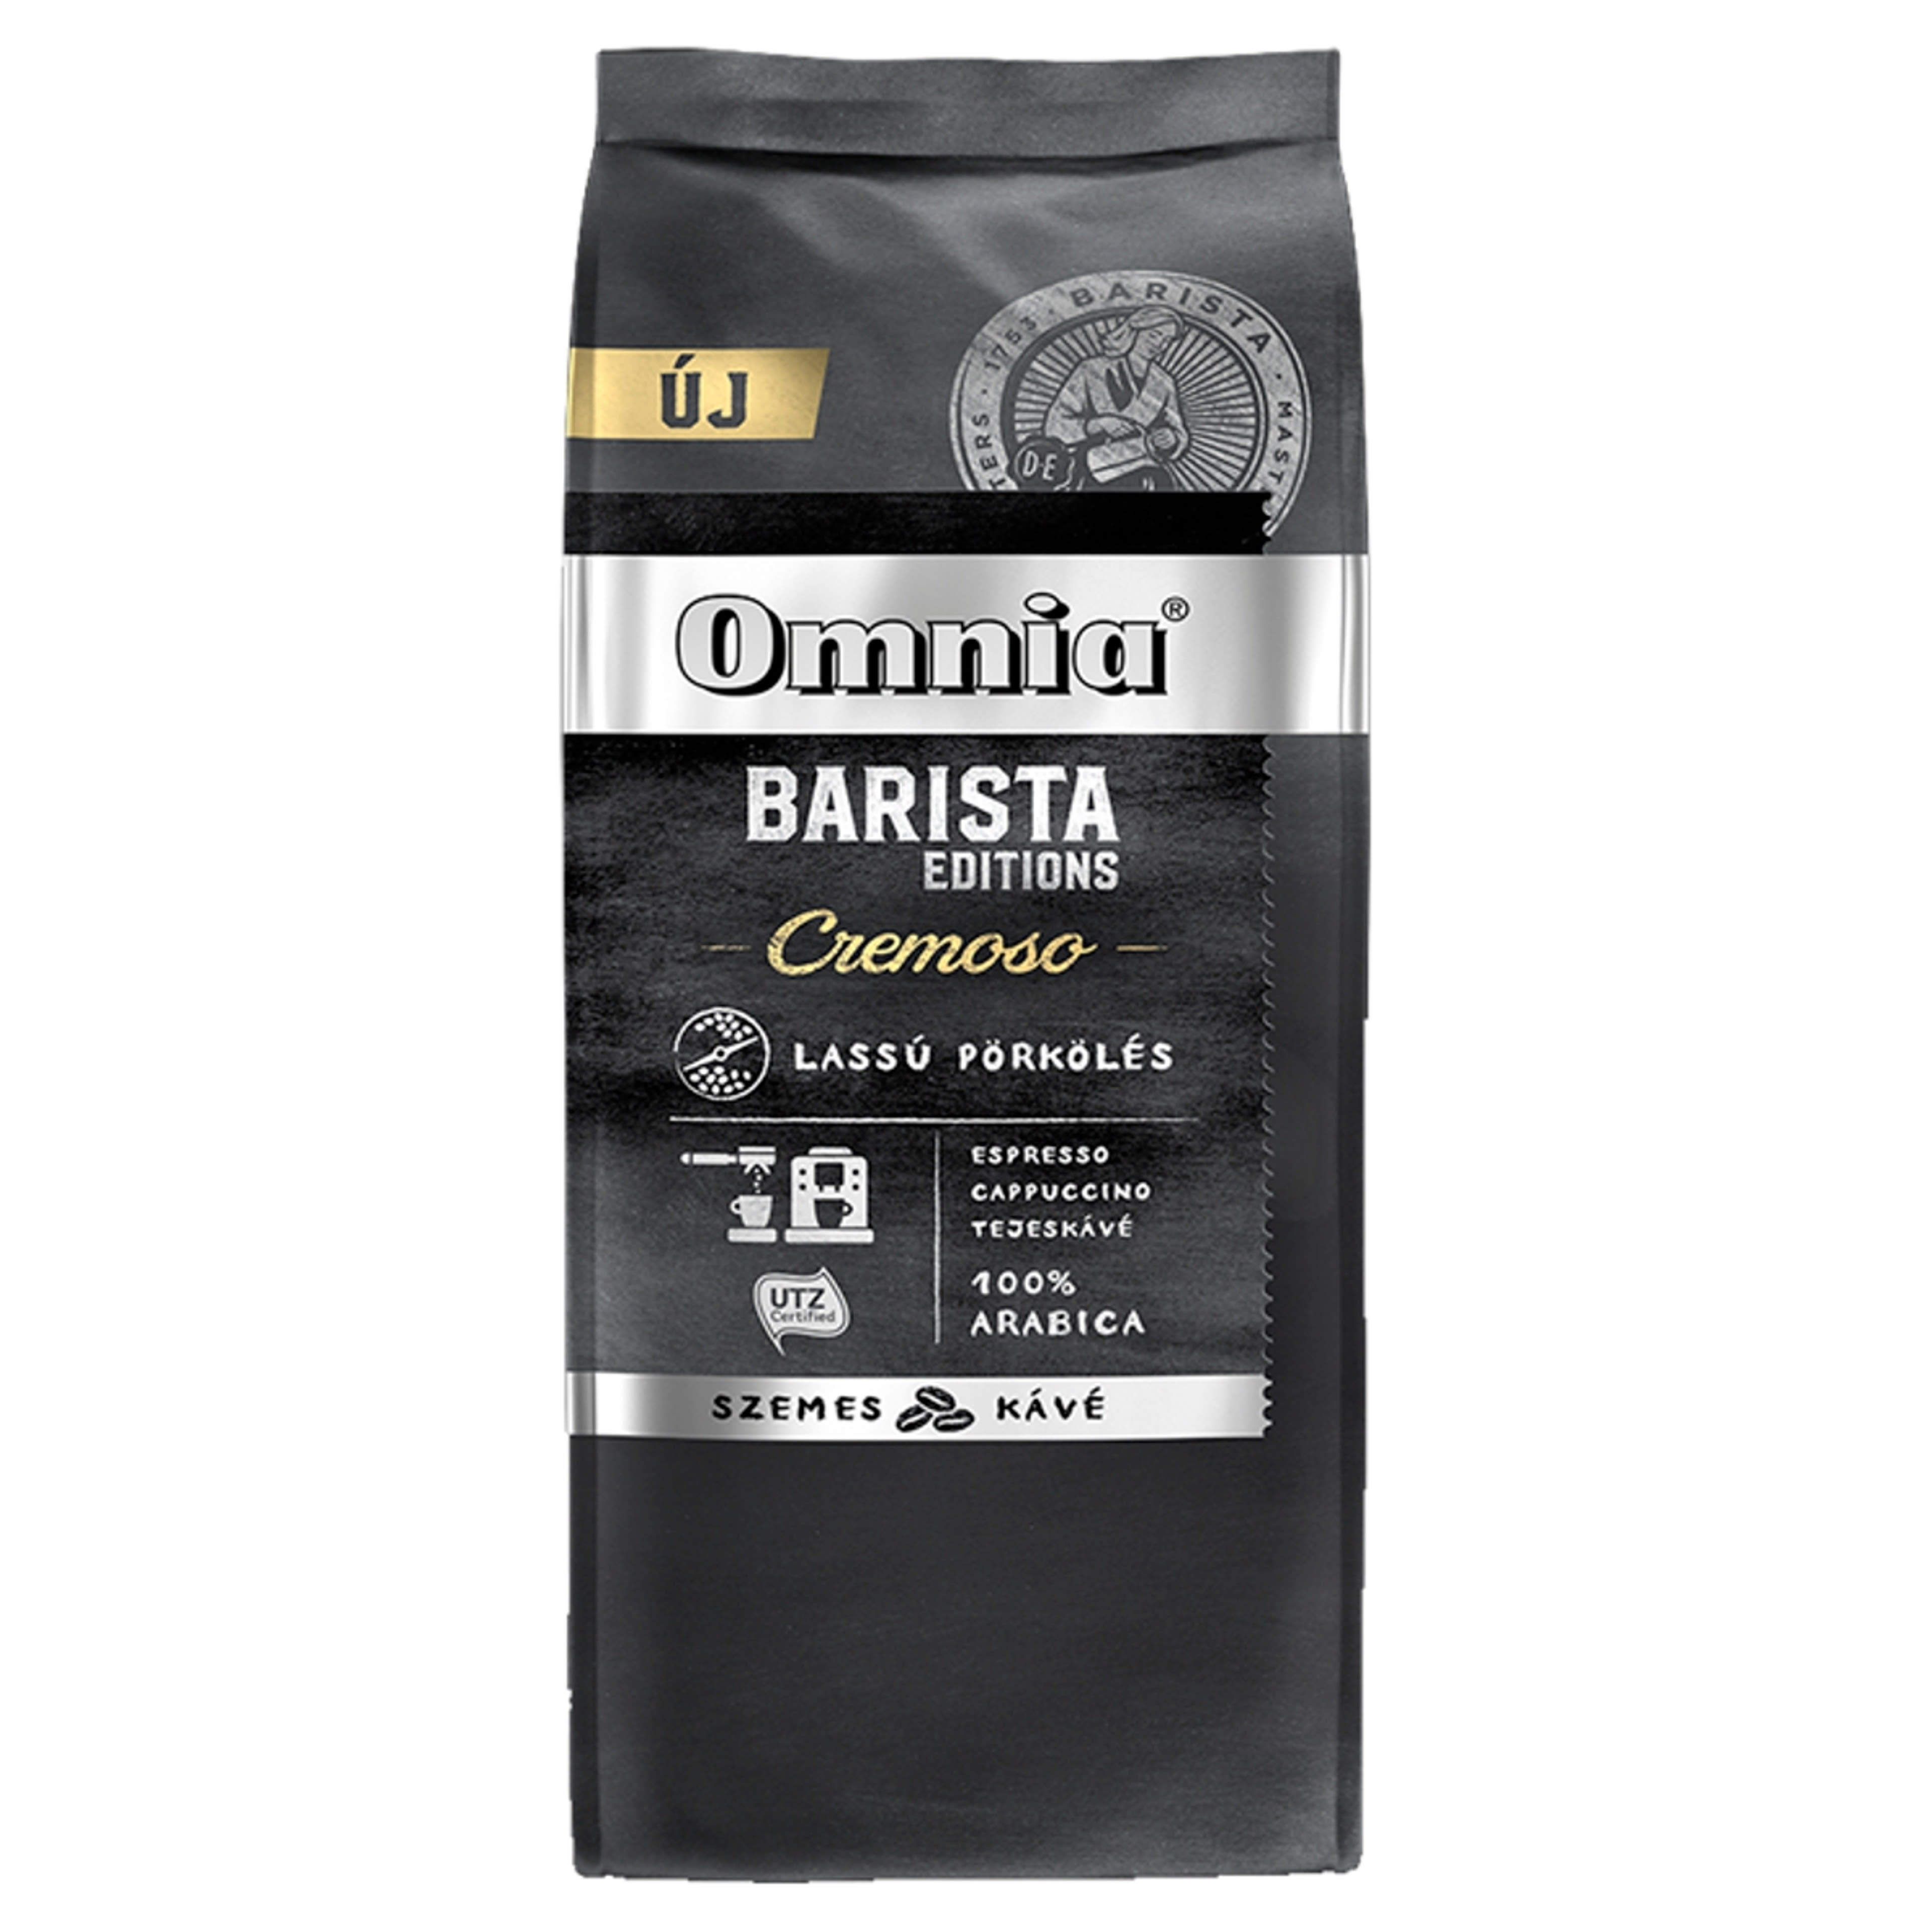 Douwe Egberts Omnia Barista Edition Cremoso kávé - 900 g-1